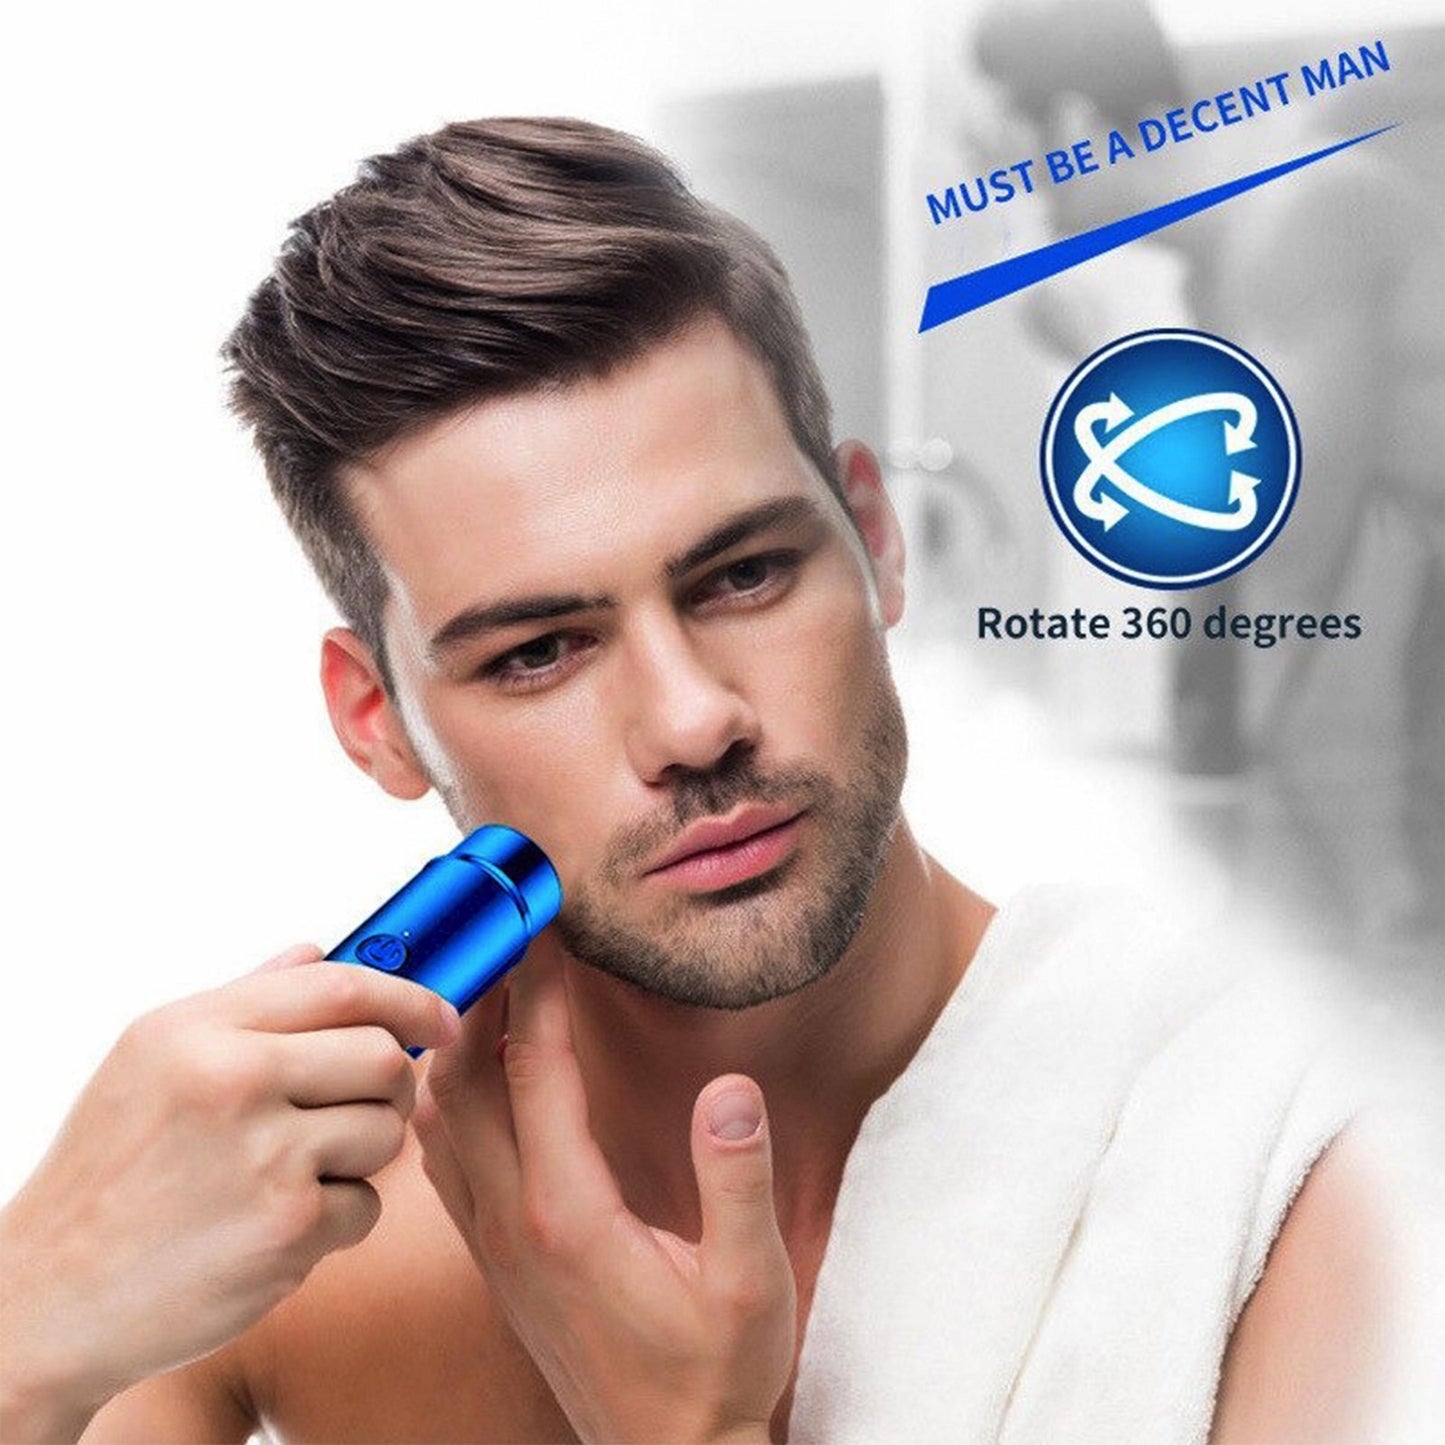 PocketShave | Mini Electric Shaver | Washable, Portable, Rechargeable |